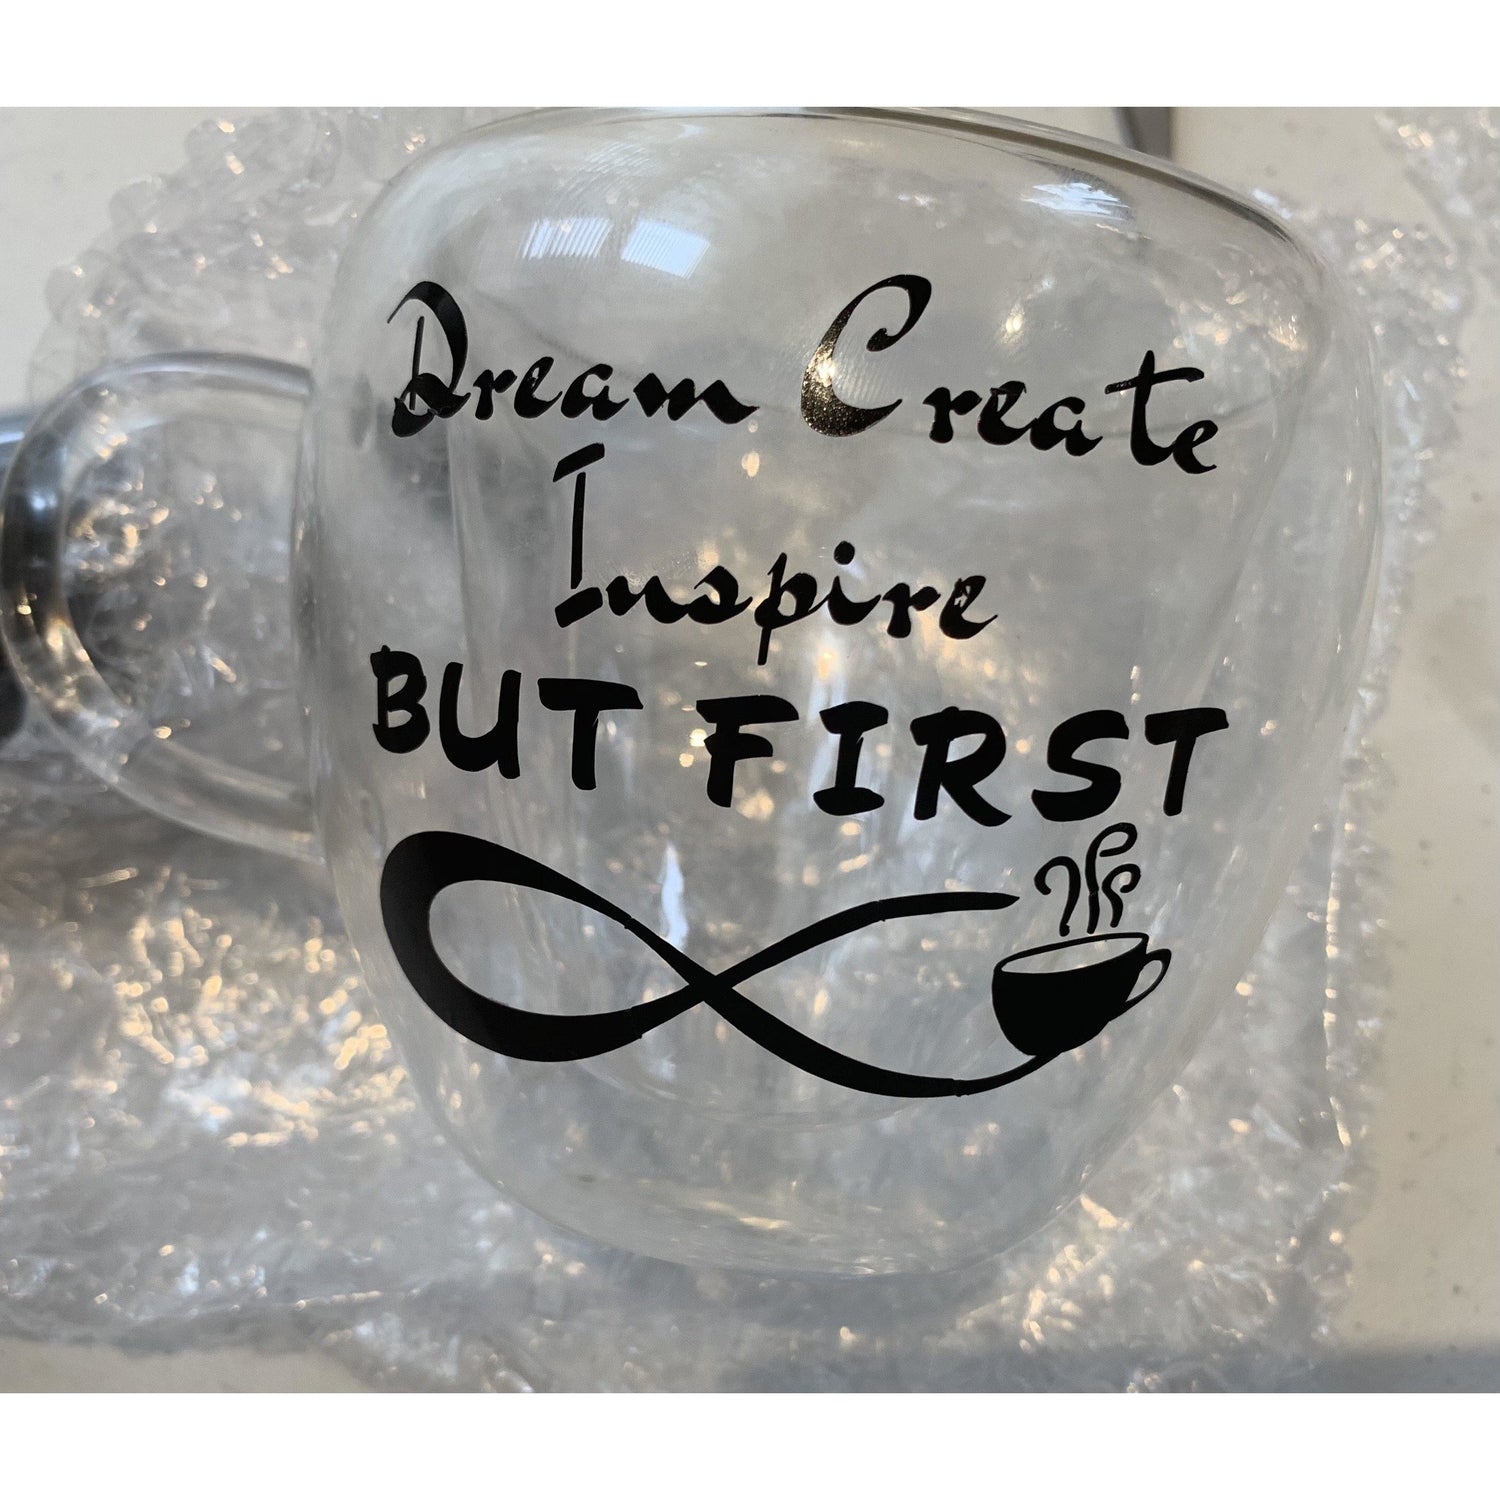 Heart Shaped Coffee Mug-Dream Create Inspire-Mug-Lenma's Creations